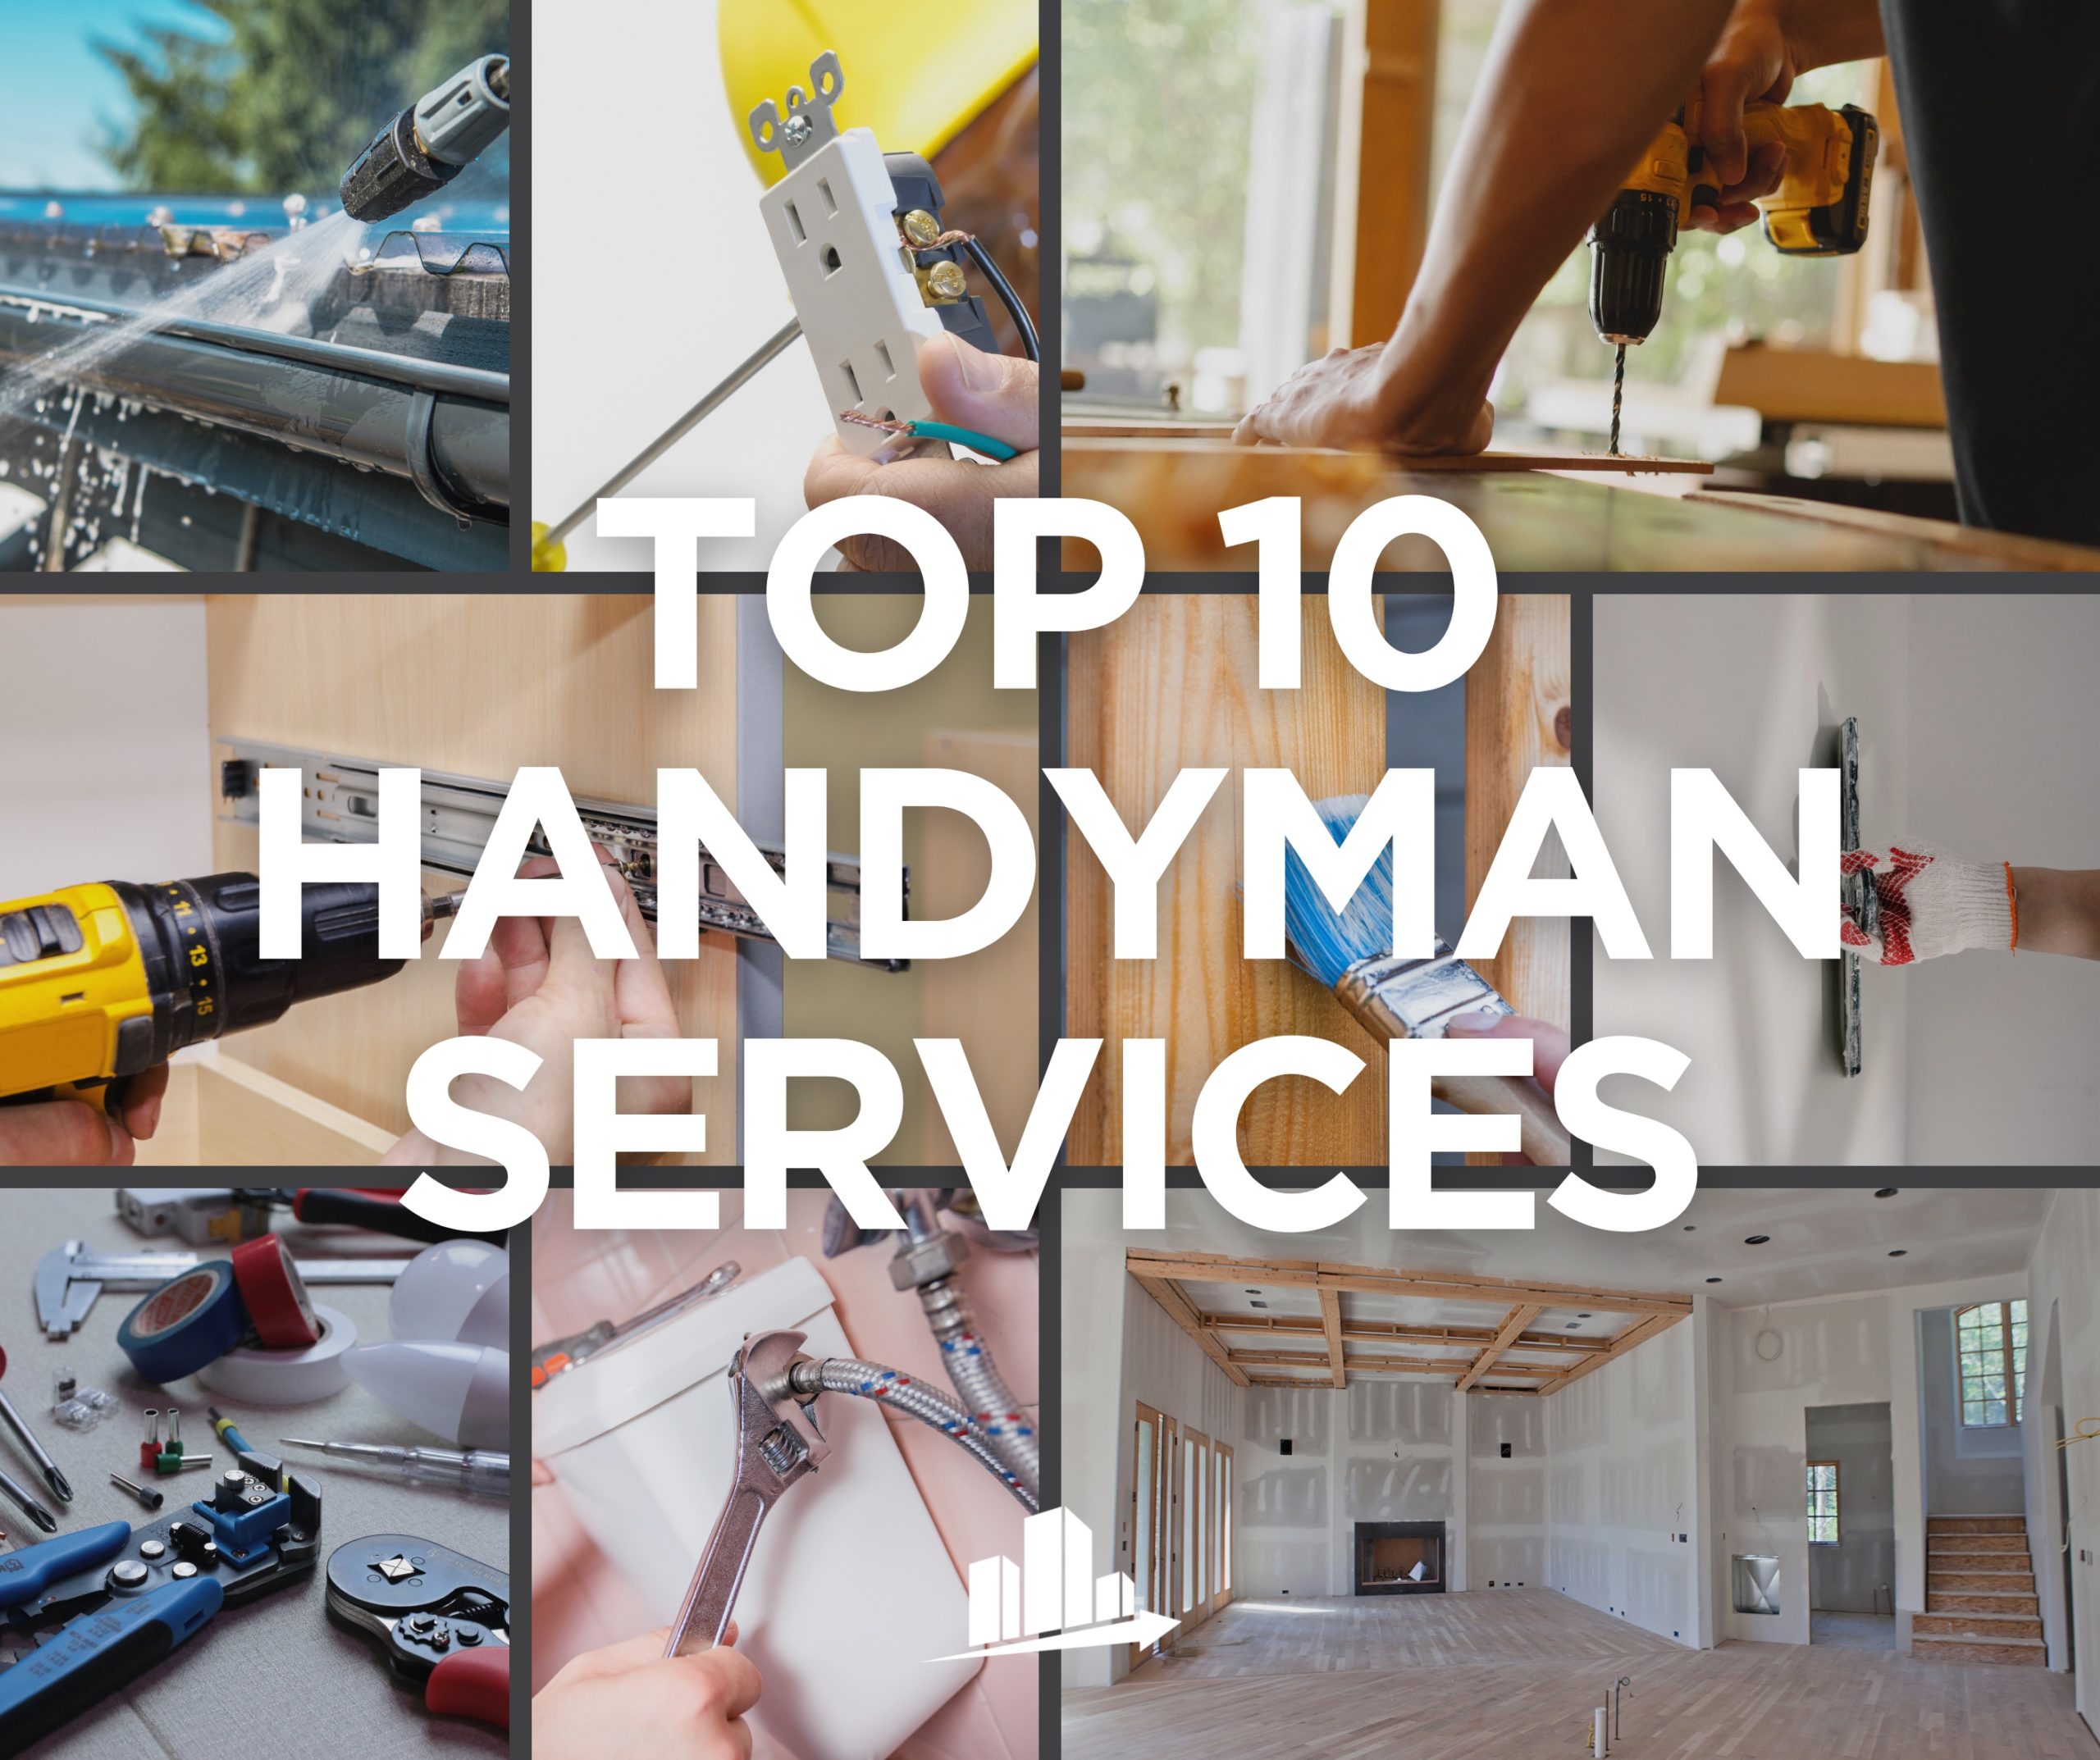 Top 10 Handyman Services